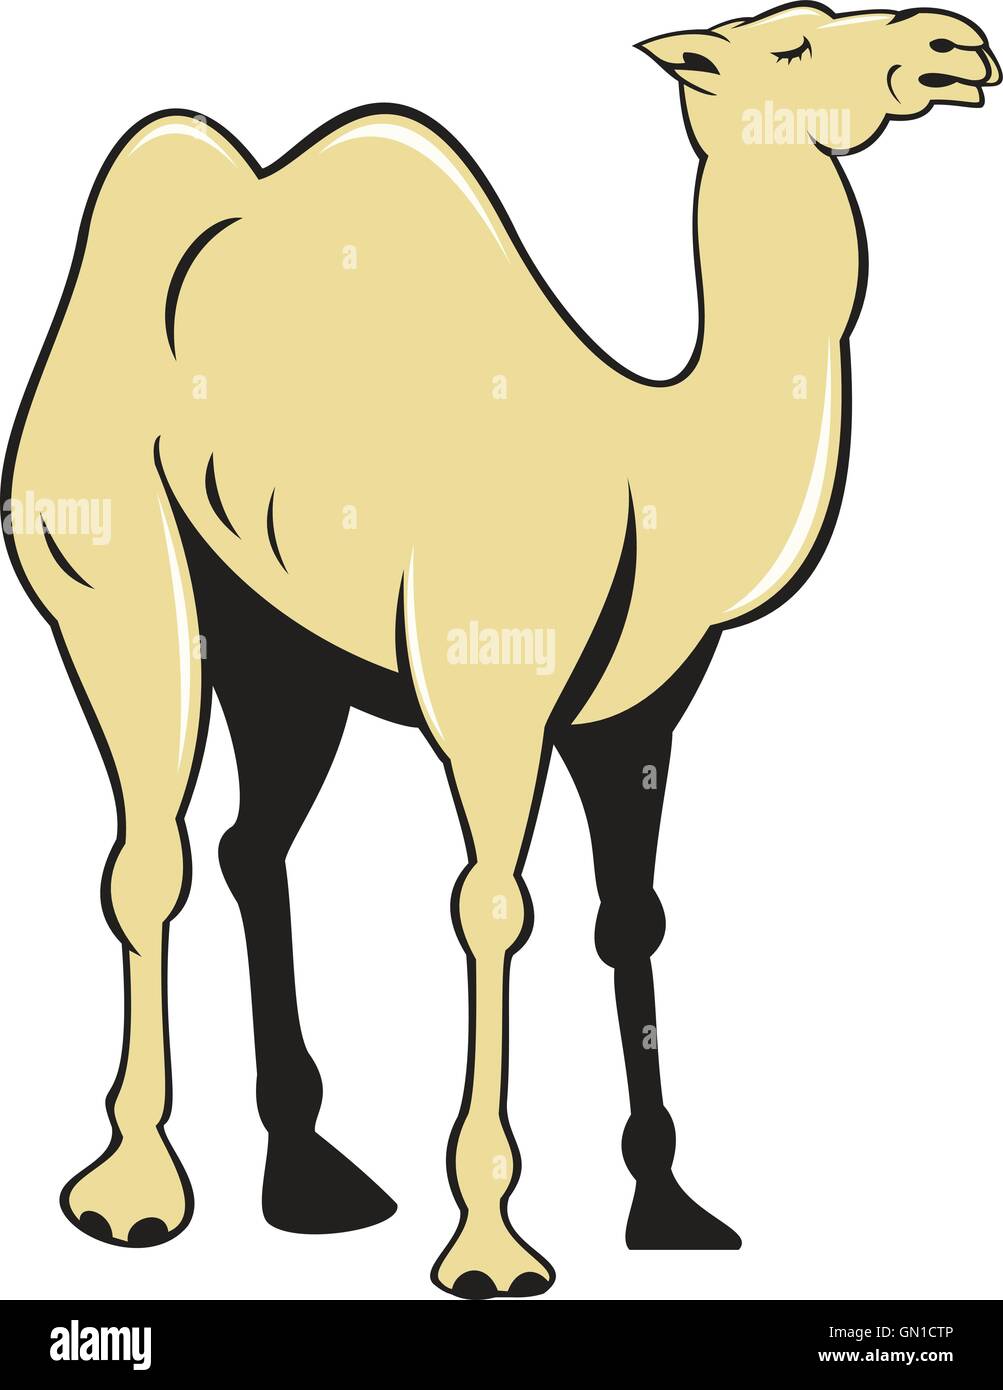 Camel Side View Cartoon Stock Vector